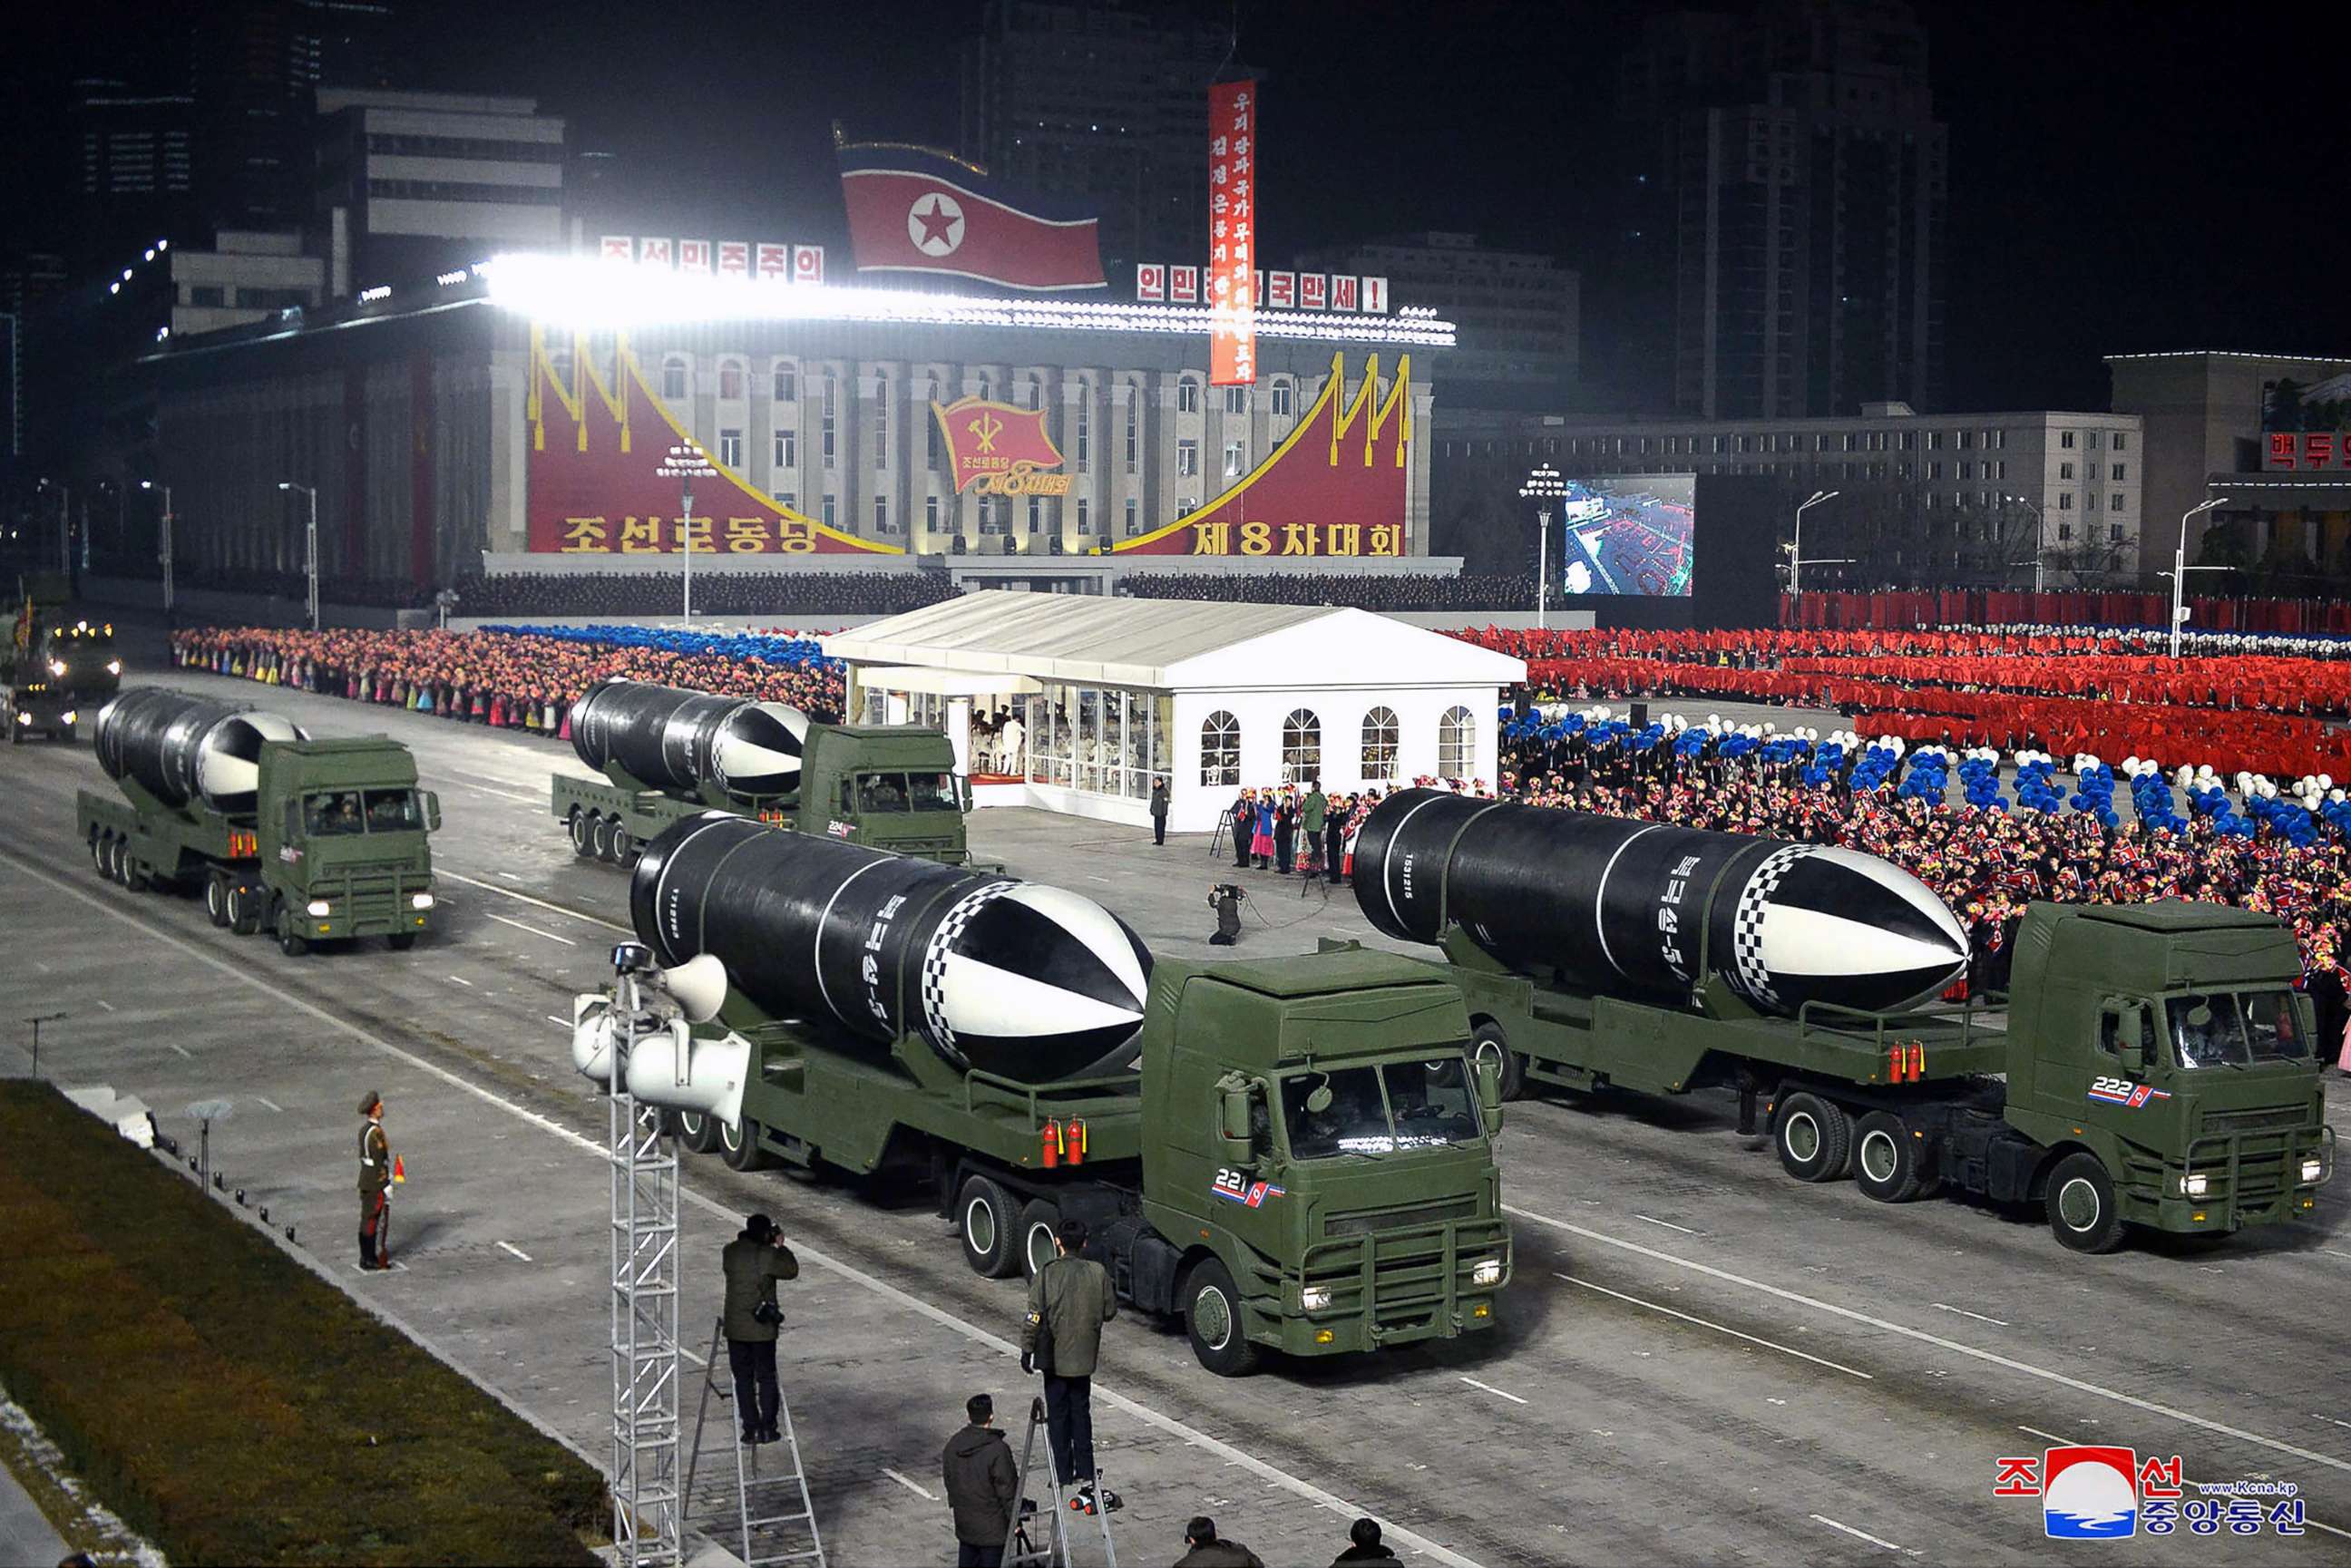 North Korea flaunts new weapons amid Washington, D.C., turmoil - ABC News